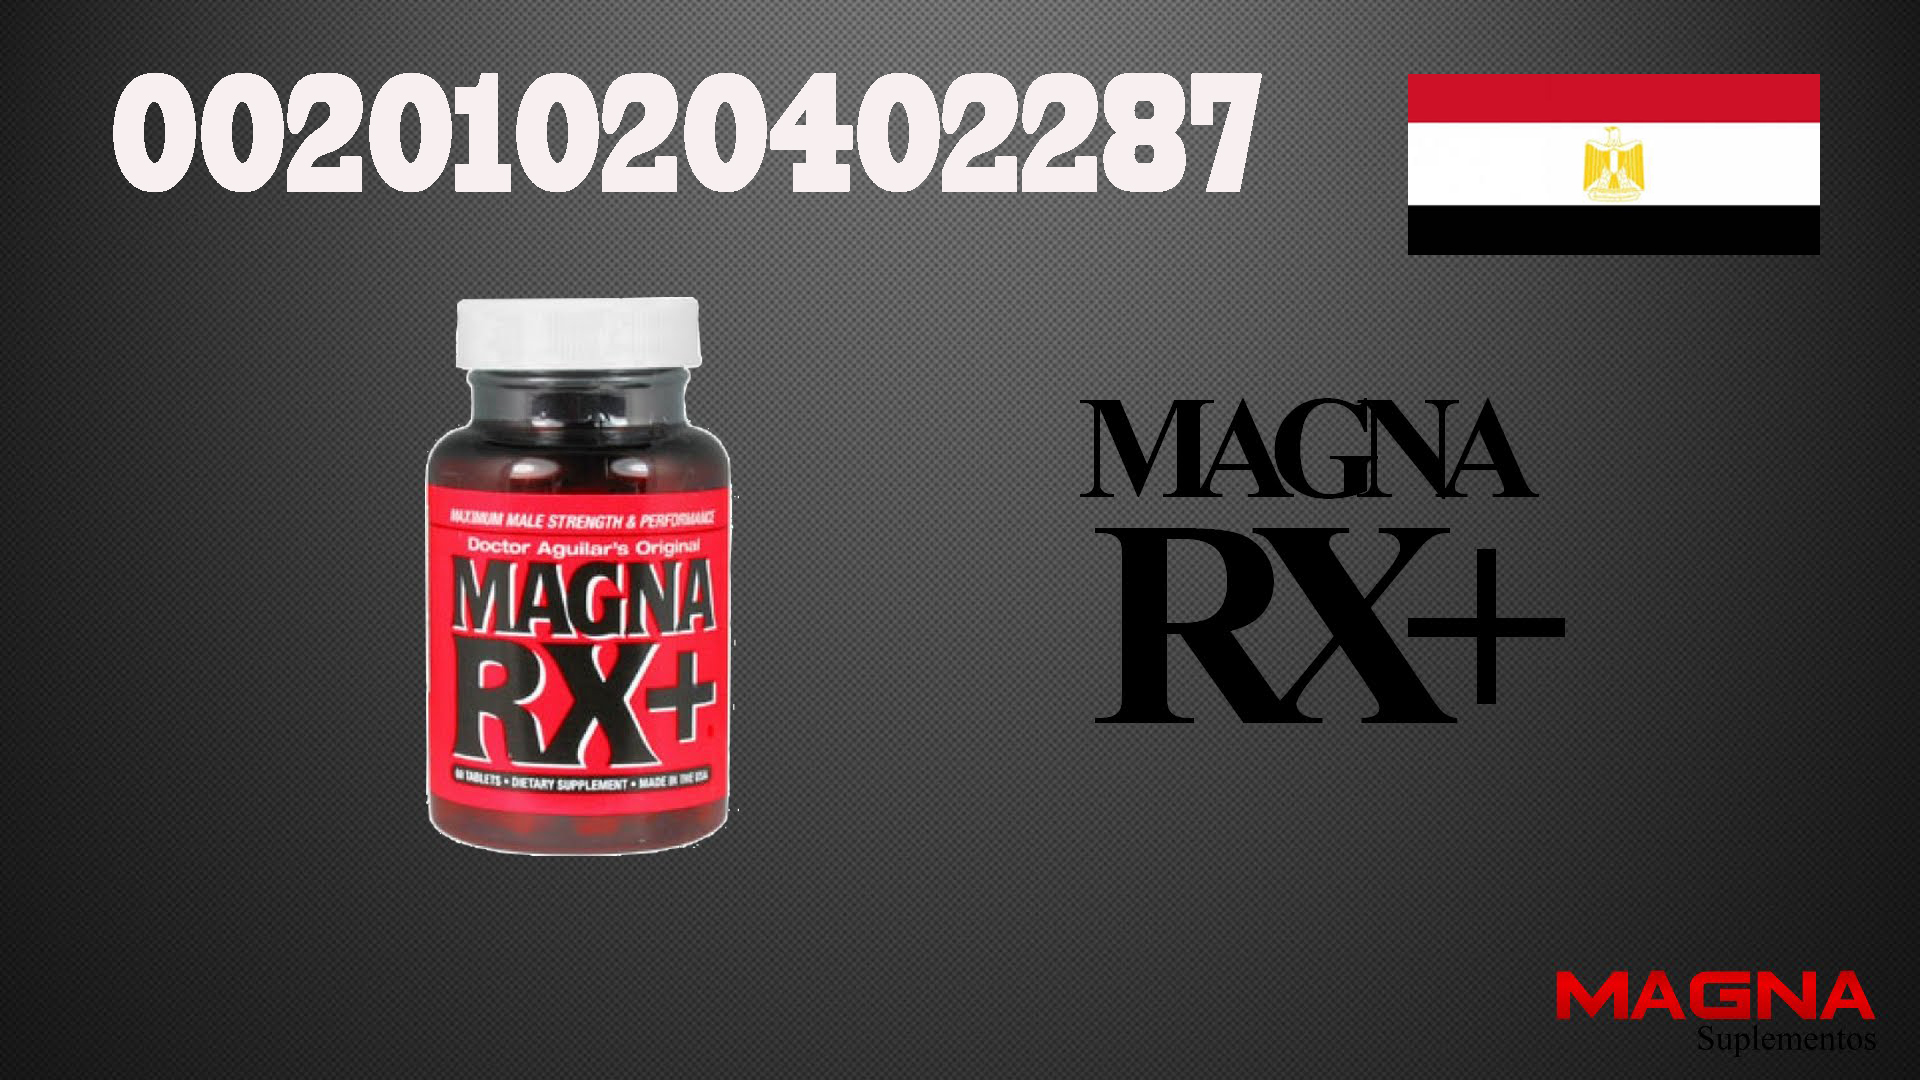 حبوب ماجنا اركس للرجال فى مصر magna rx plus - RORO_ SLIM 2020